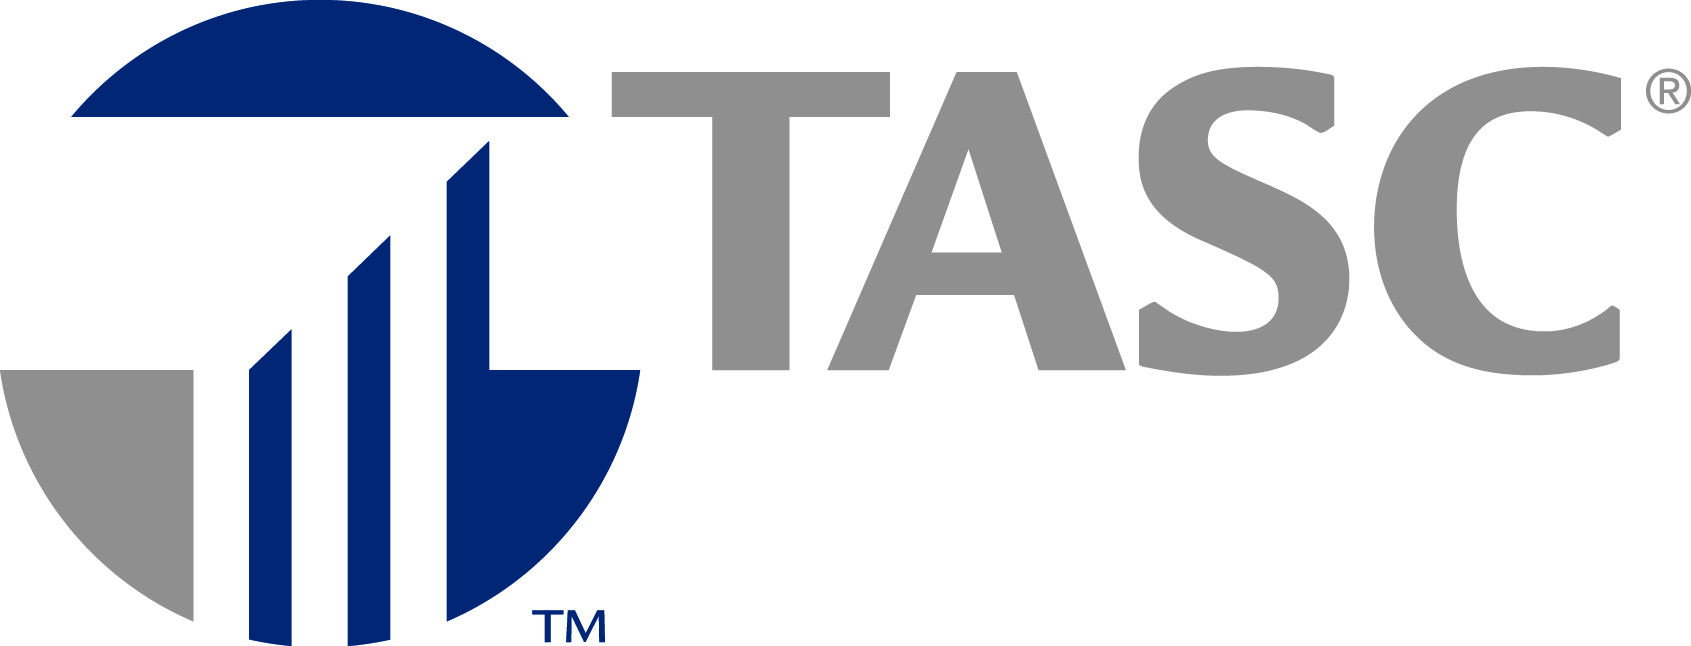 Tasc Logo photo - 1